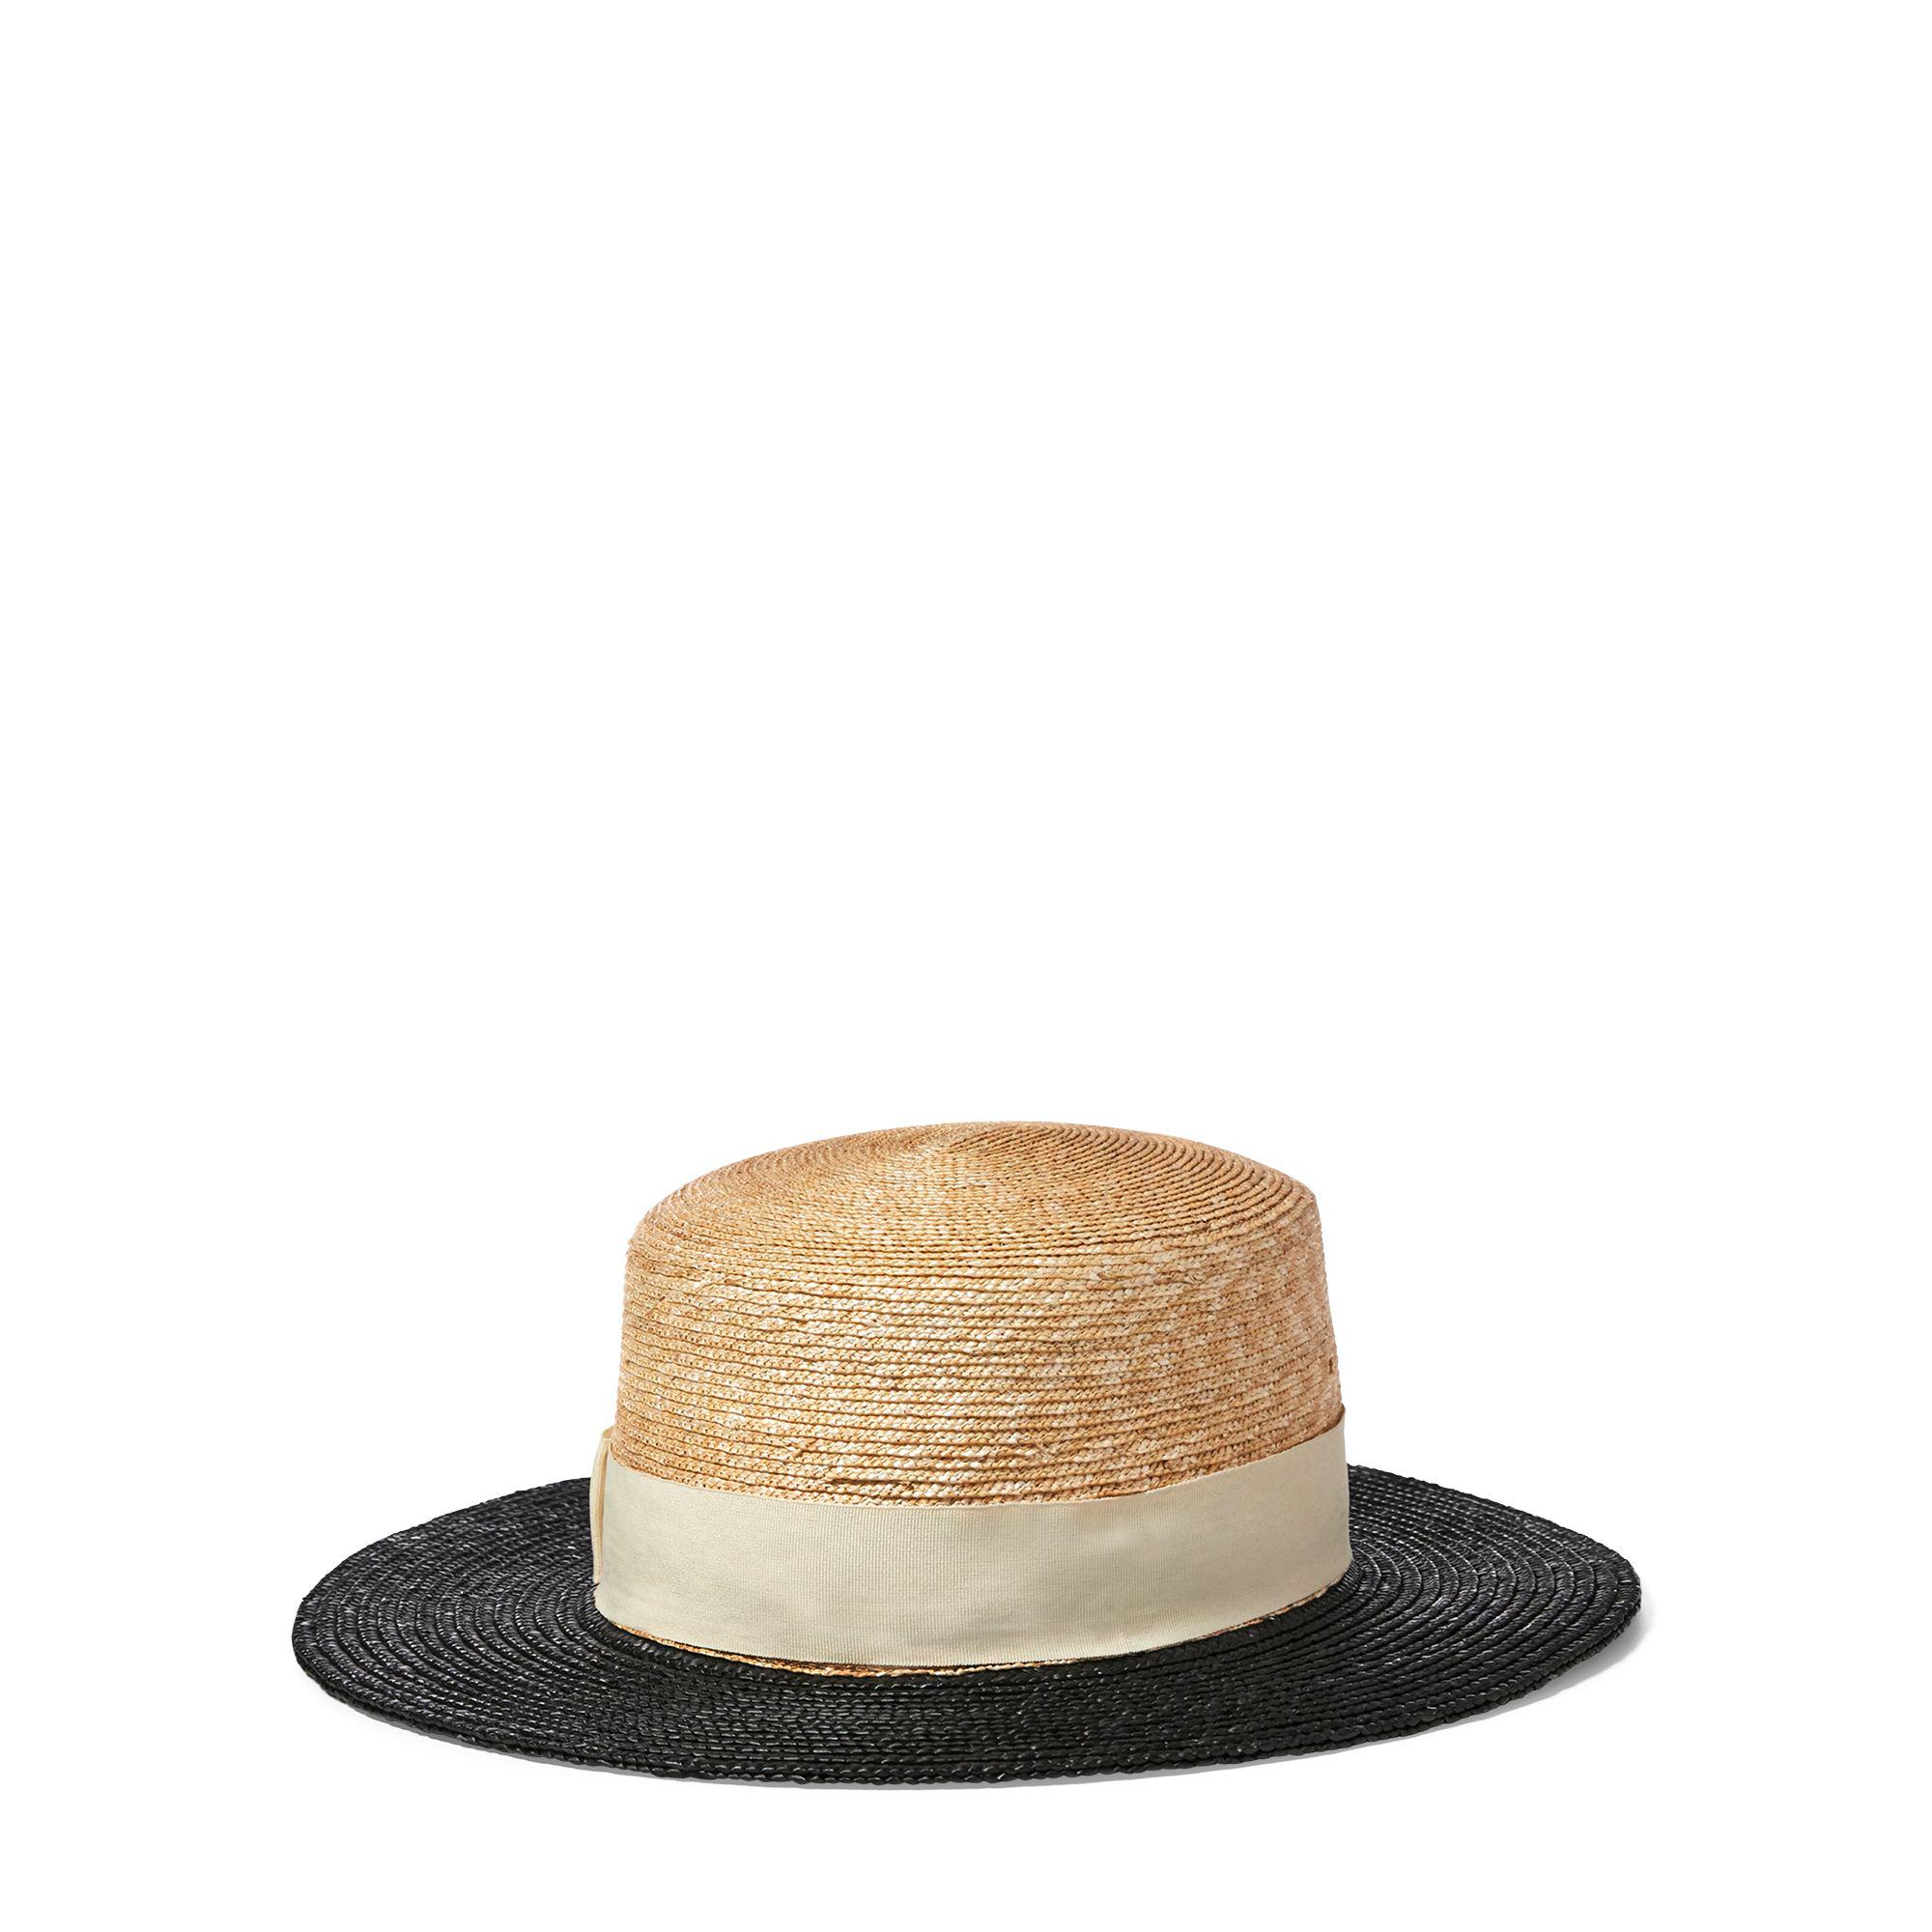 Ralph Lauren Straw Boater Hat in Natural - Lyst